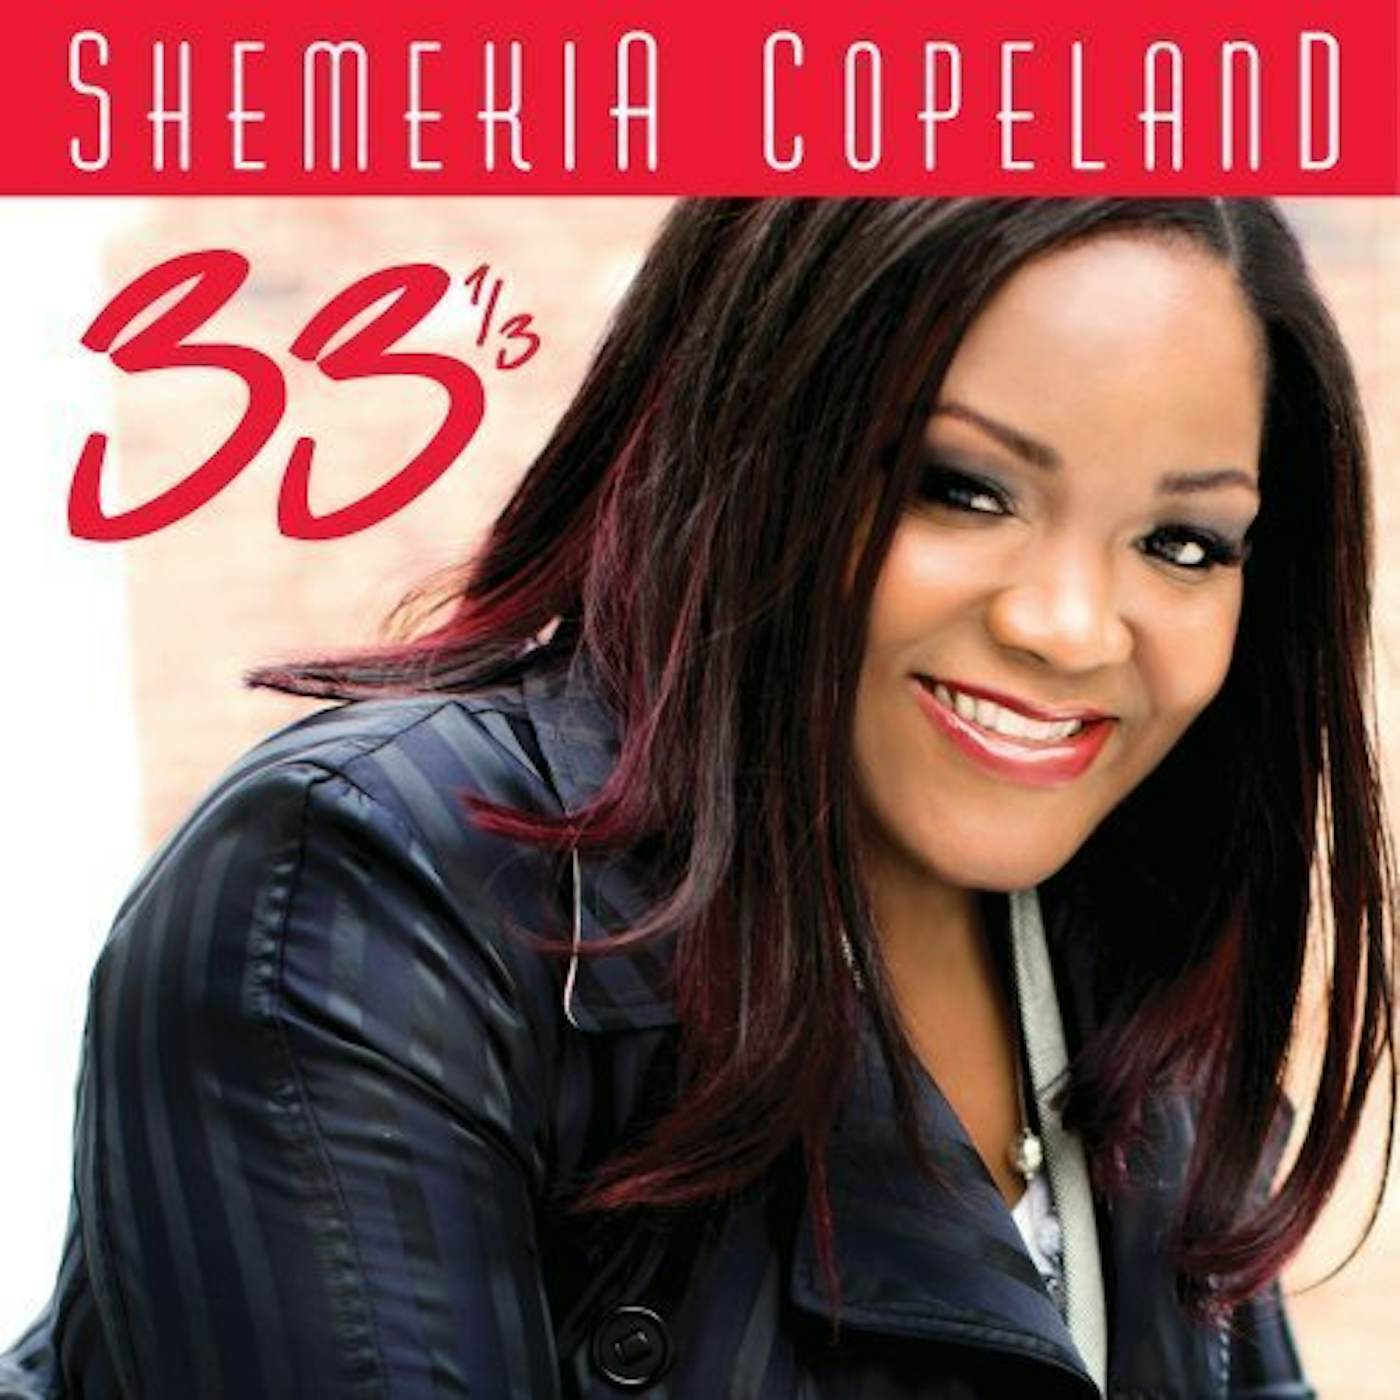 Shemekia Copeland 33 1/3 CD